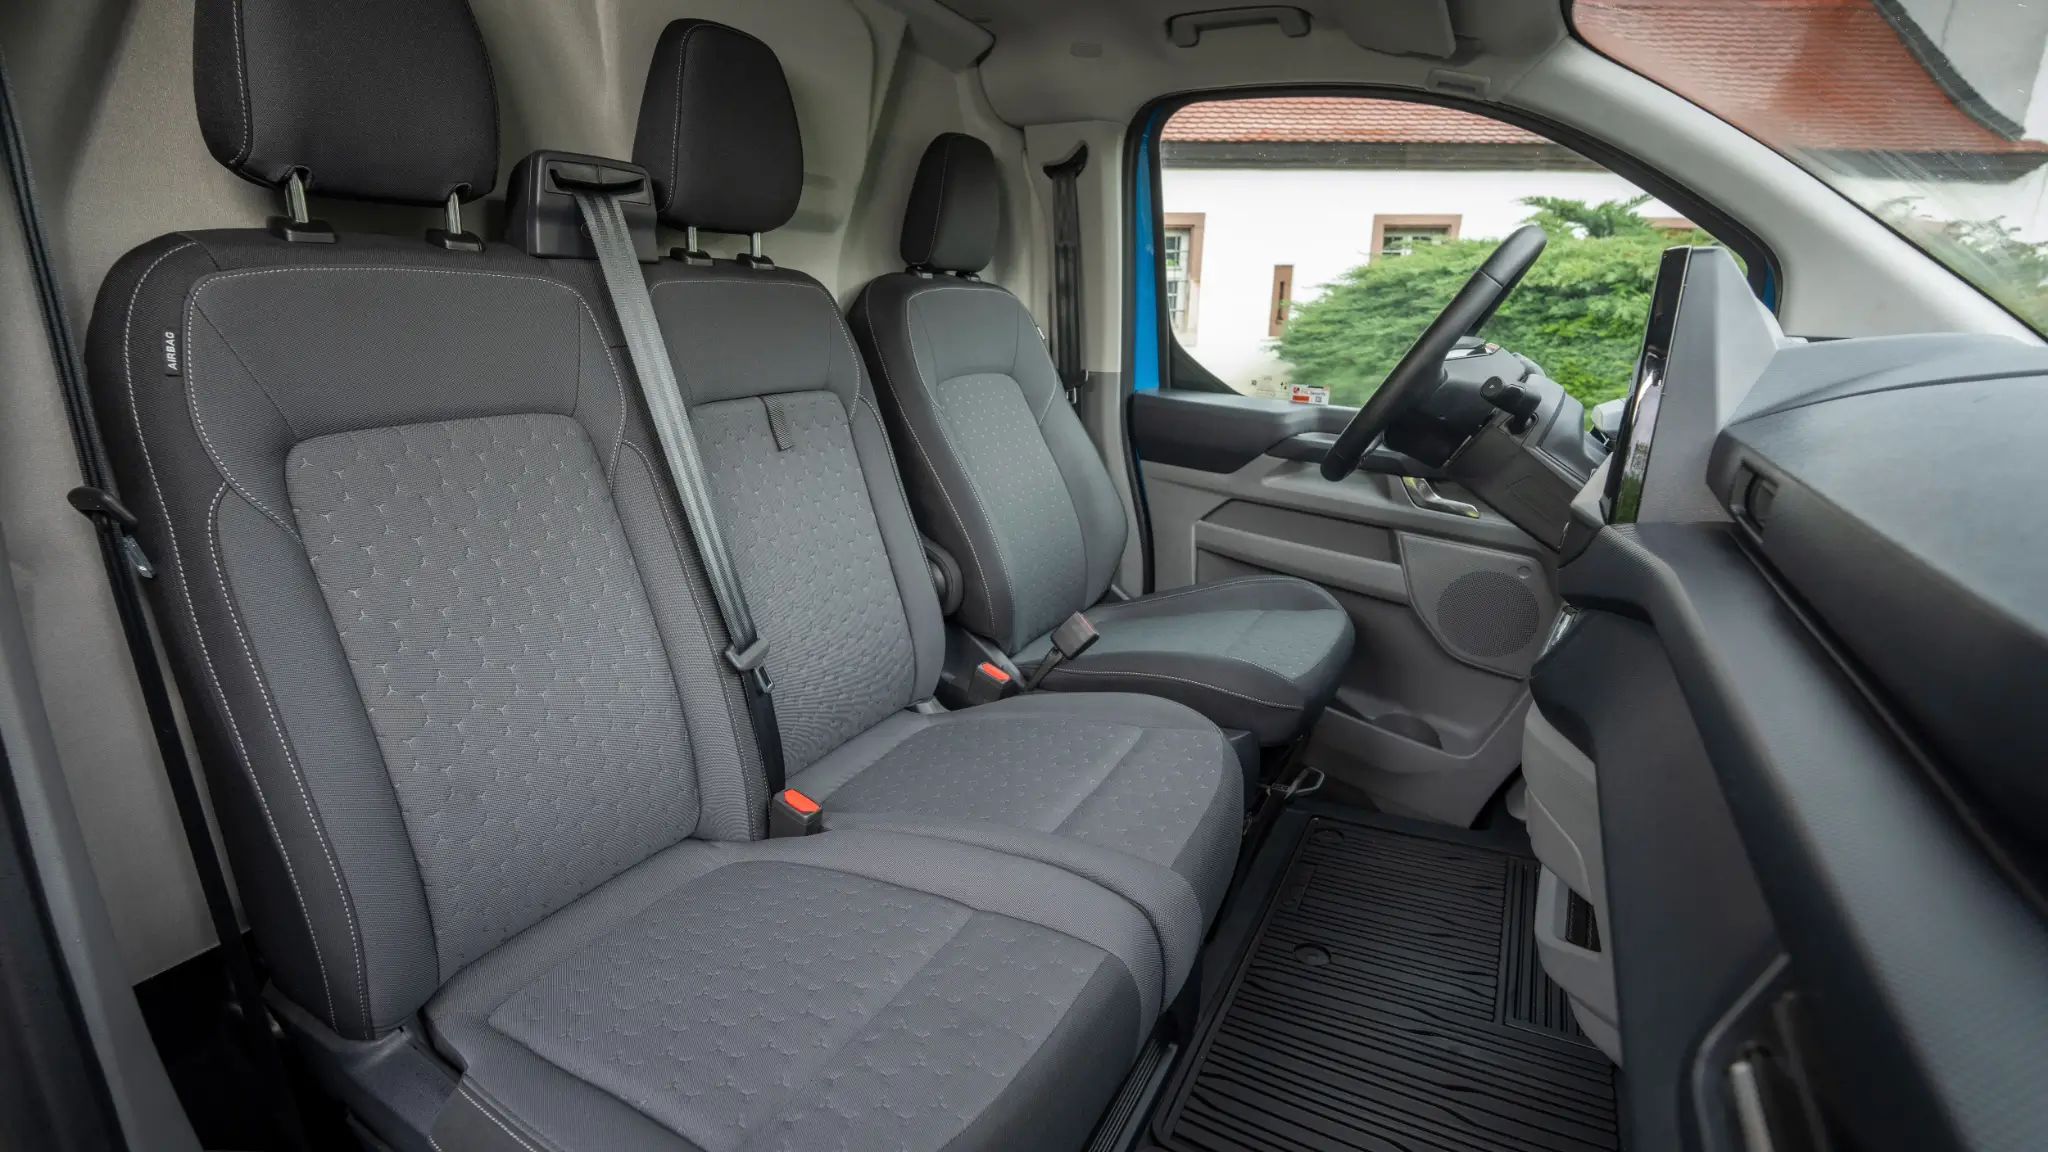 Ford E-transit Custom interior